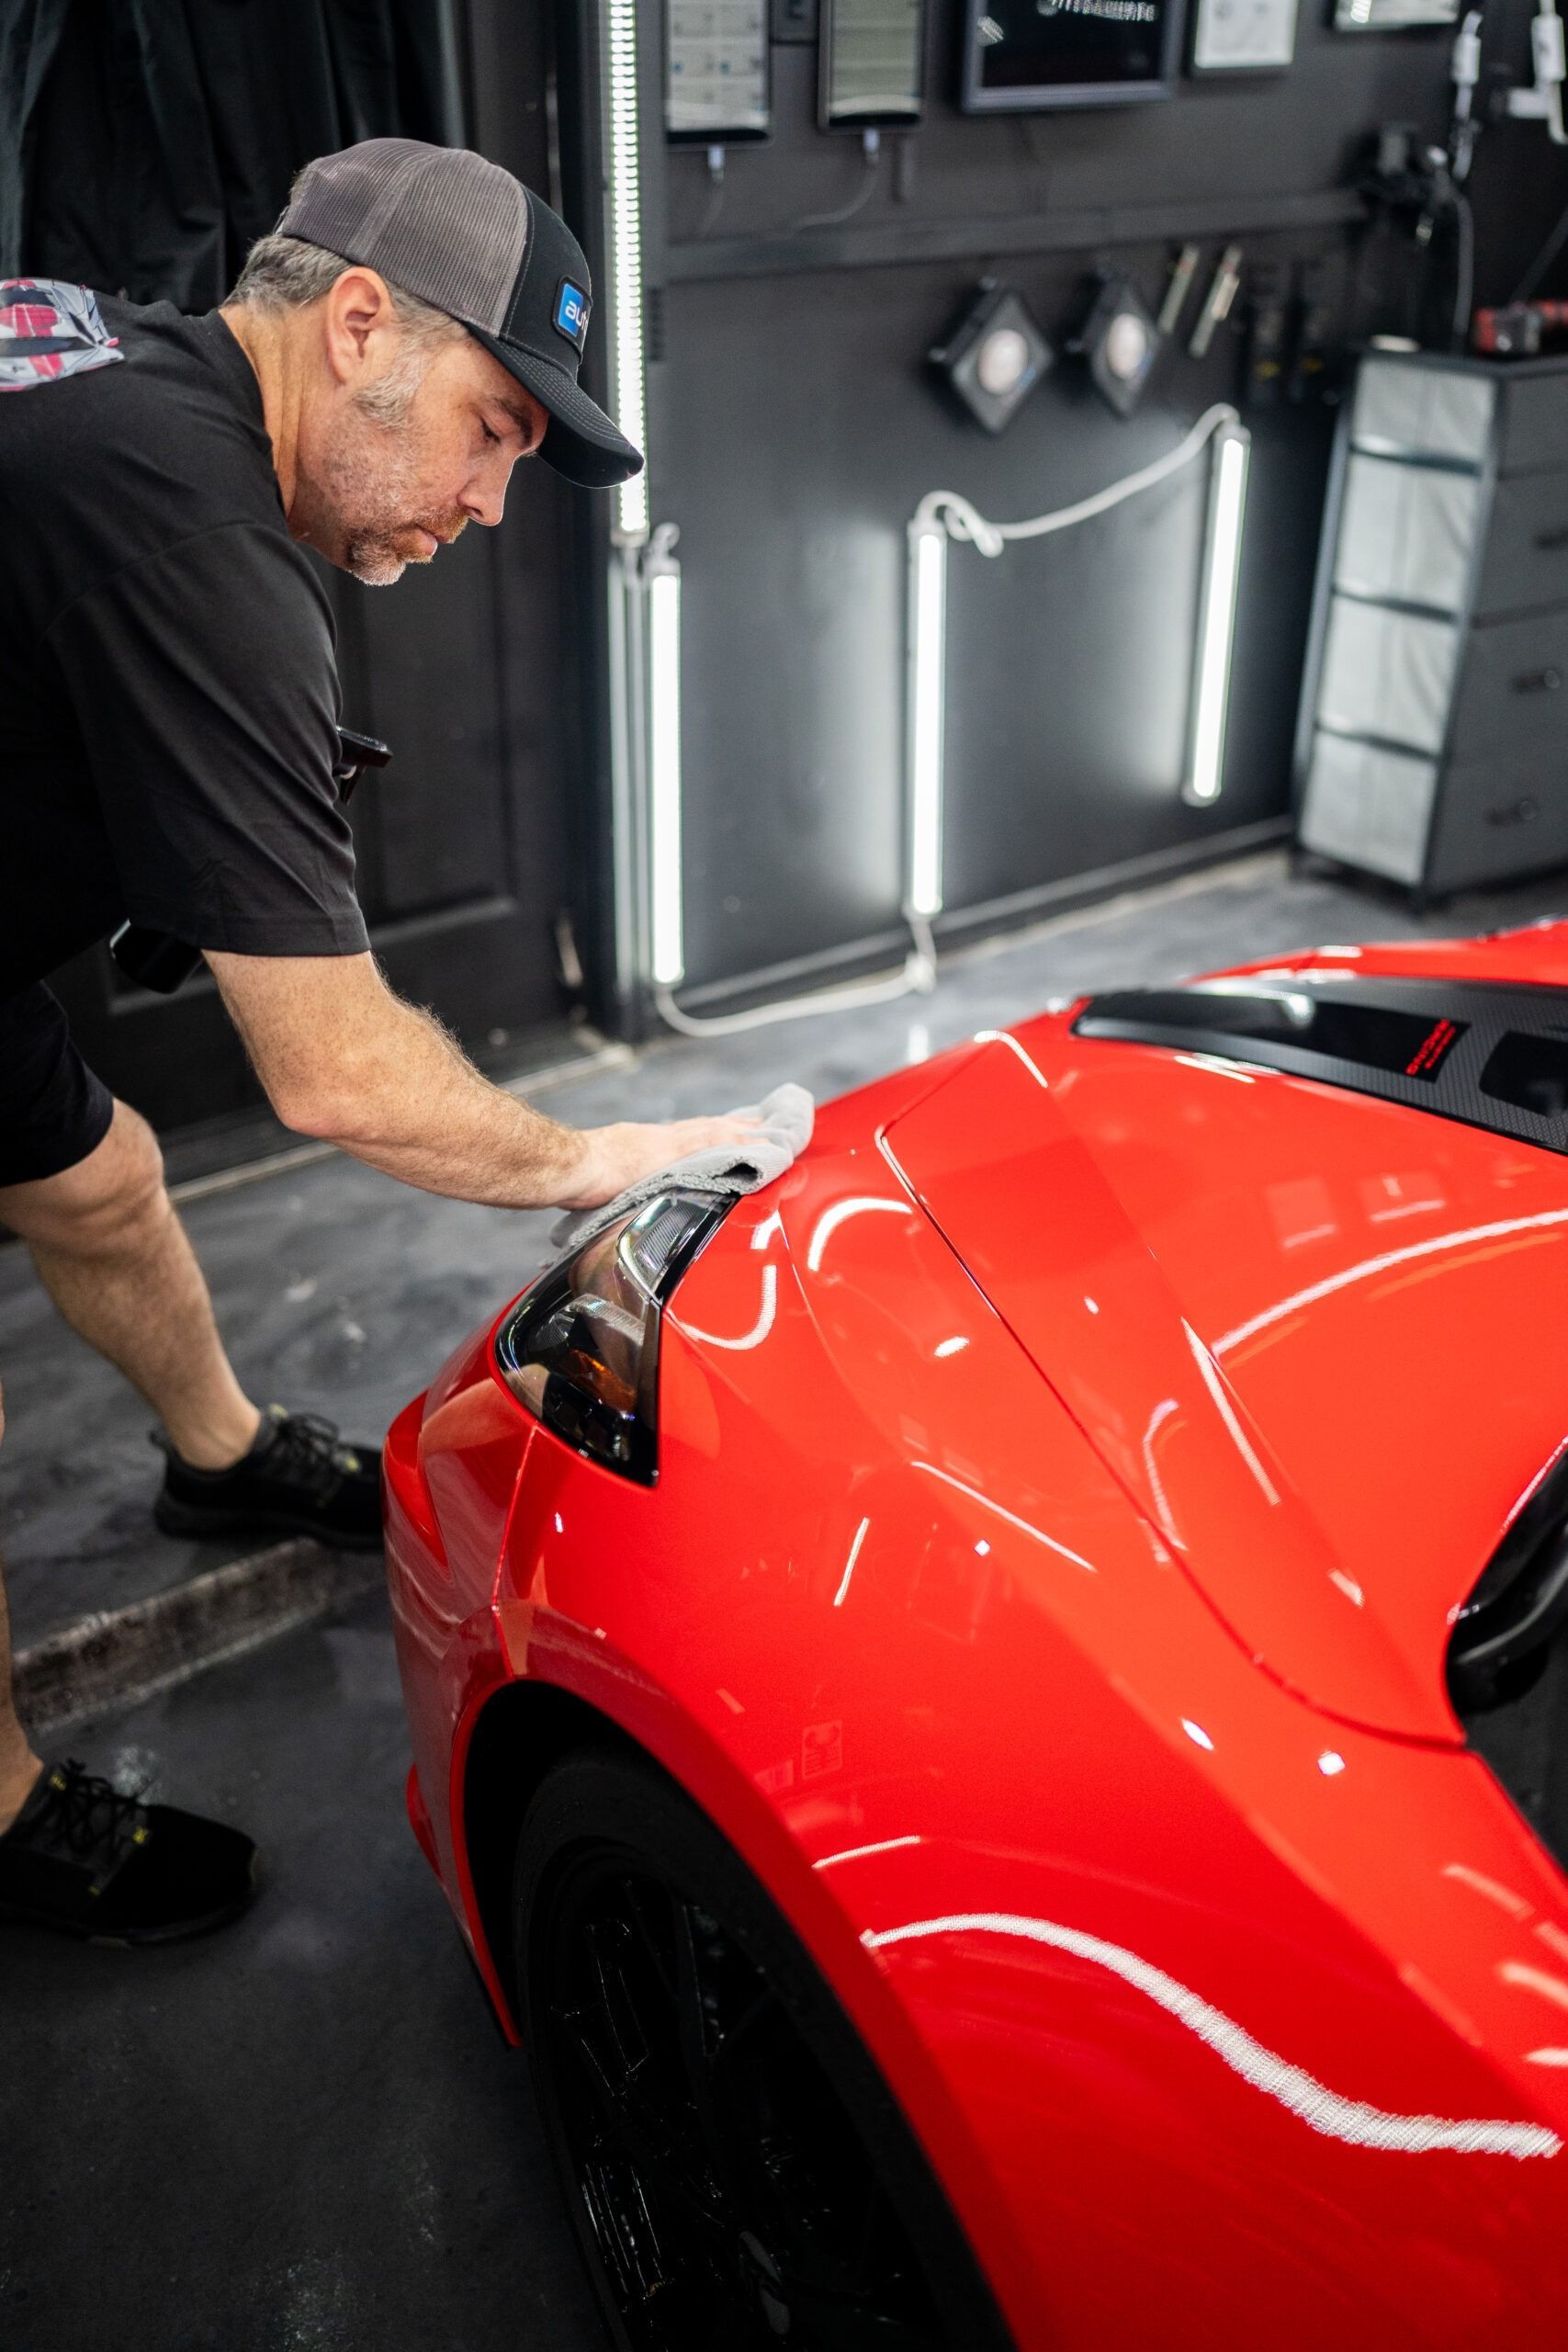 A man is polishing a red sports car in a garage.